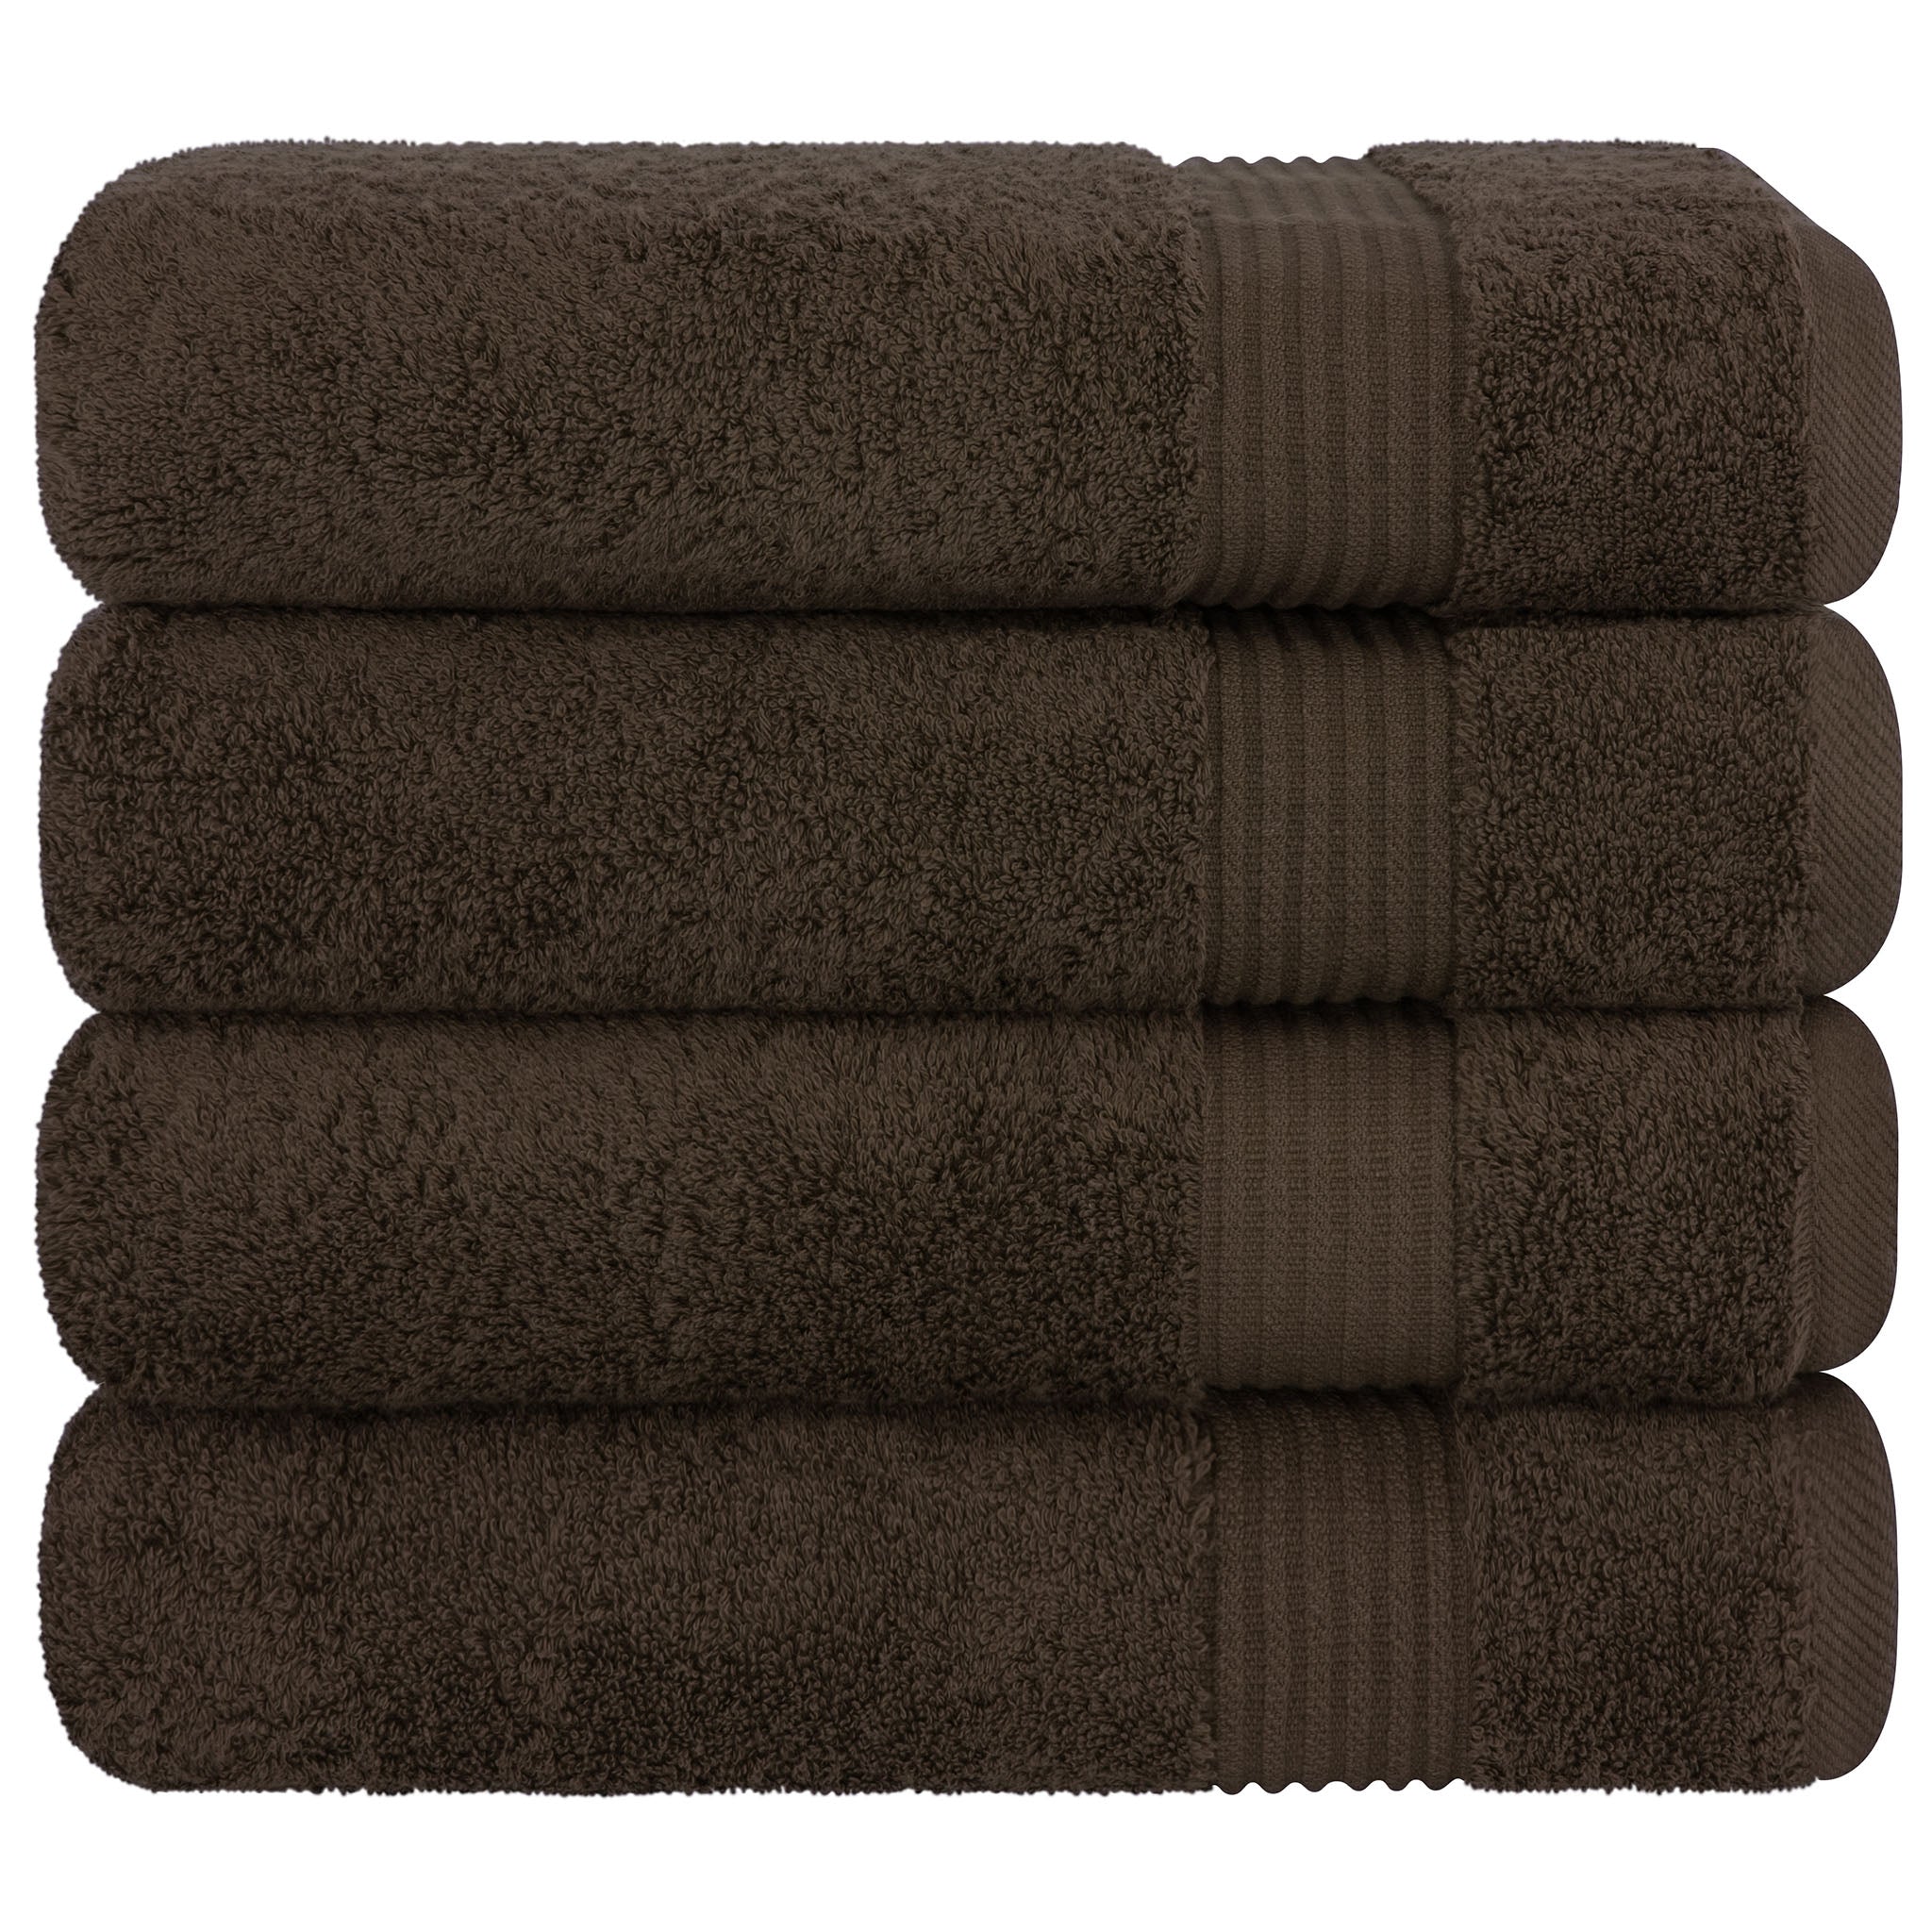 American Soft Linen Bekos 100% Cotton Turkish Towels, 4 Piece Bath Towel Set -chocolate-brown-06